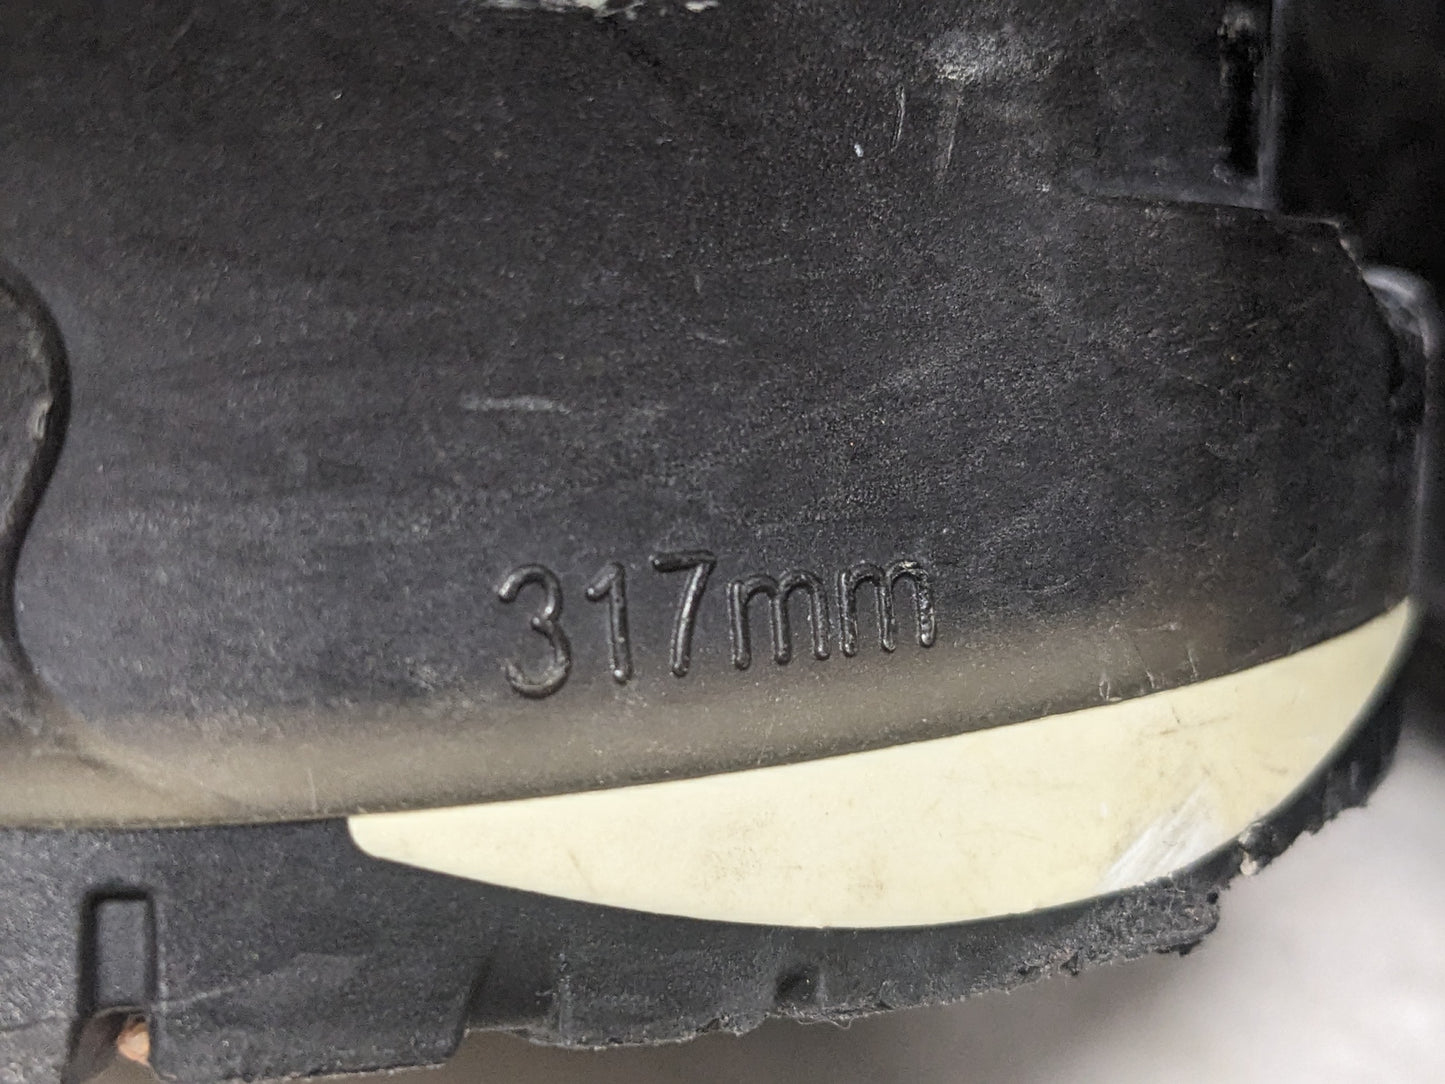 Atomic Waymaker Flex 90 Ski Boots Size 27.5 Color Black Condition Used